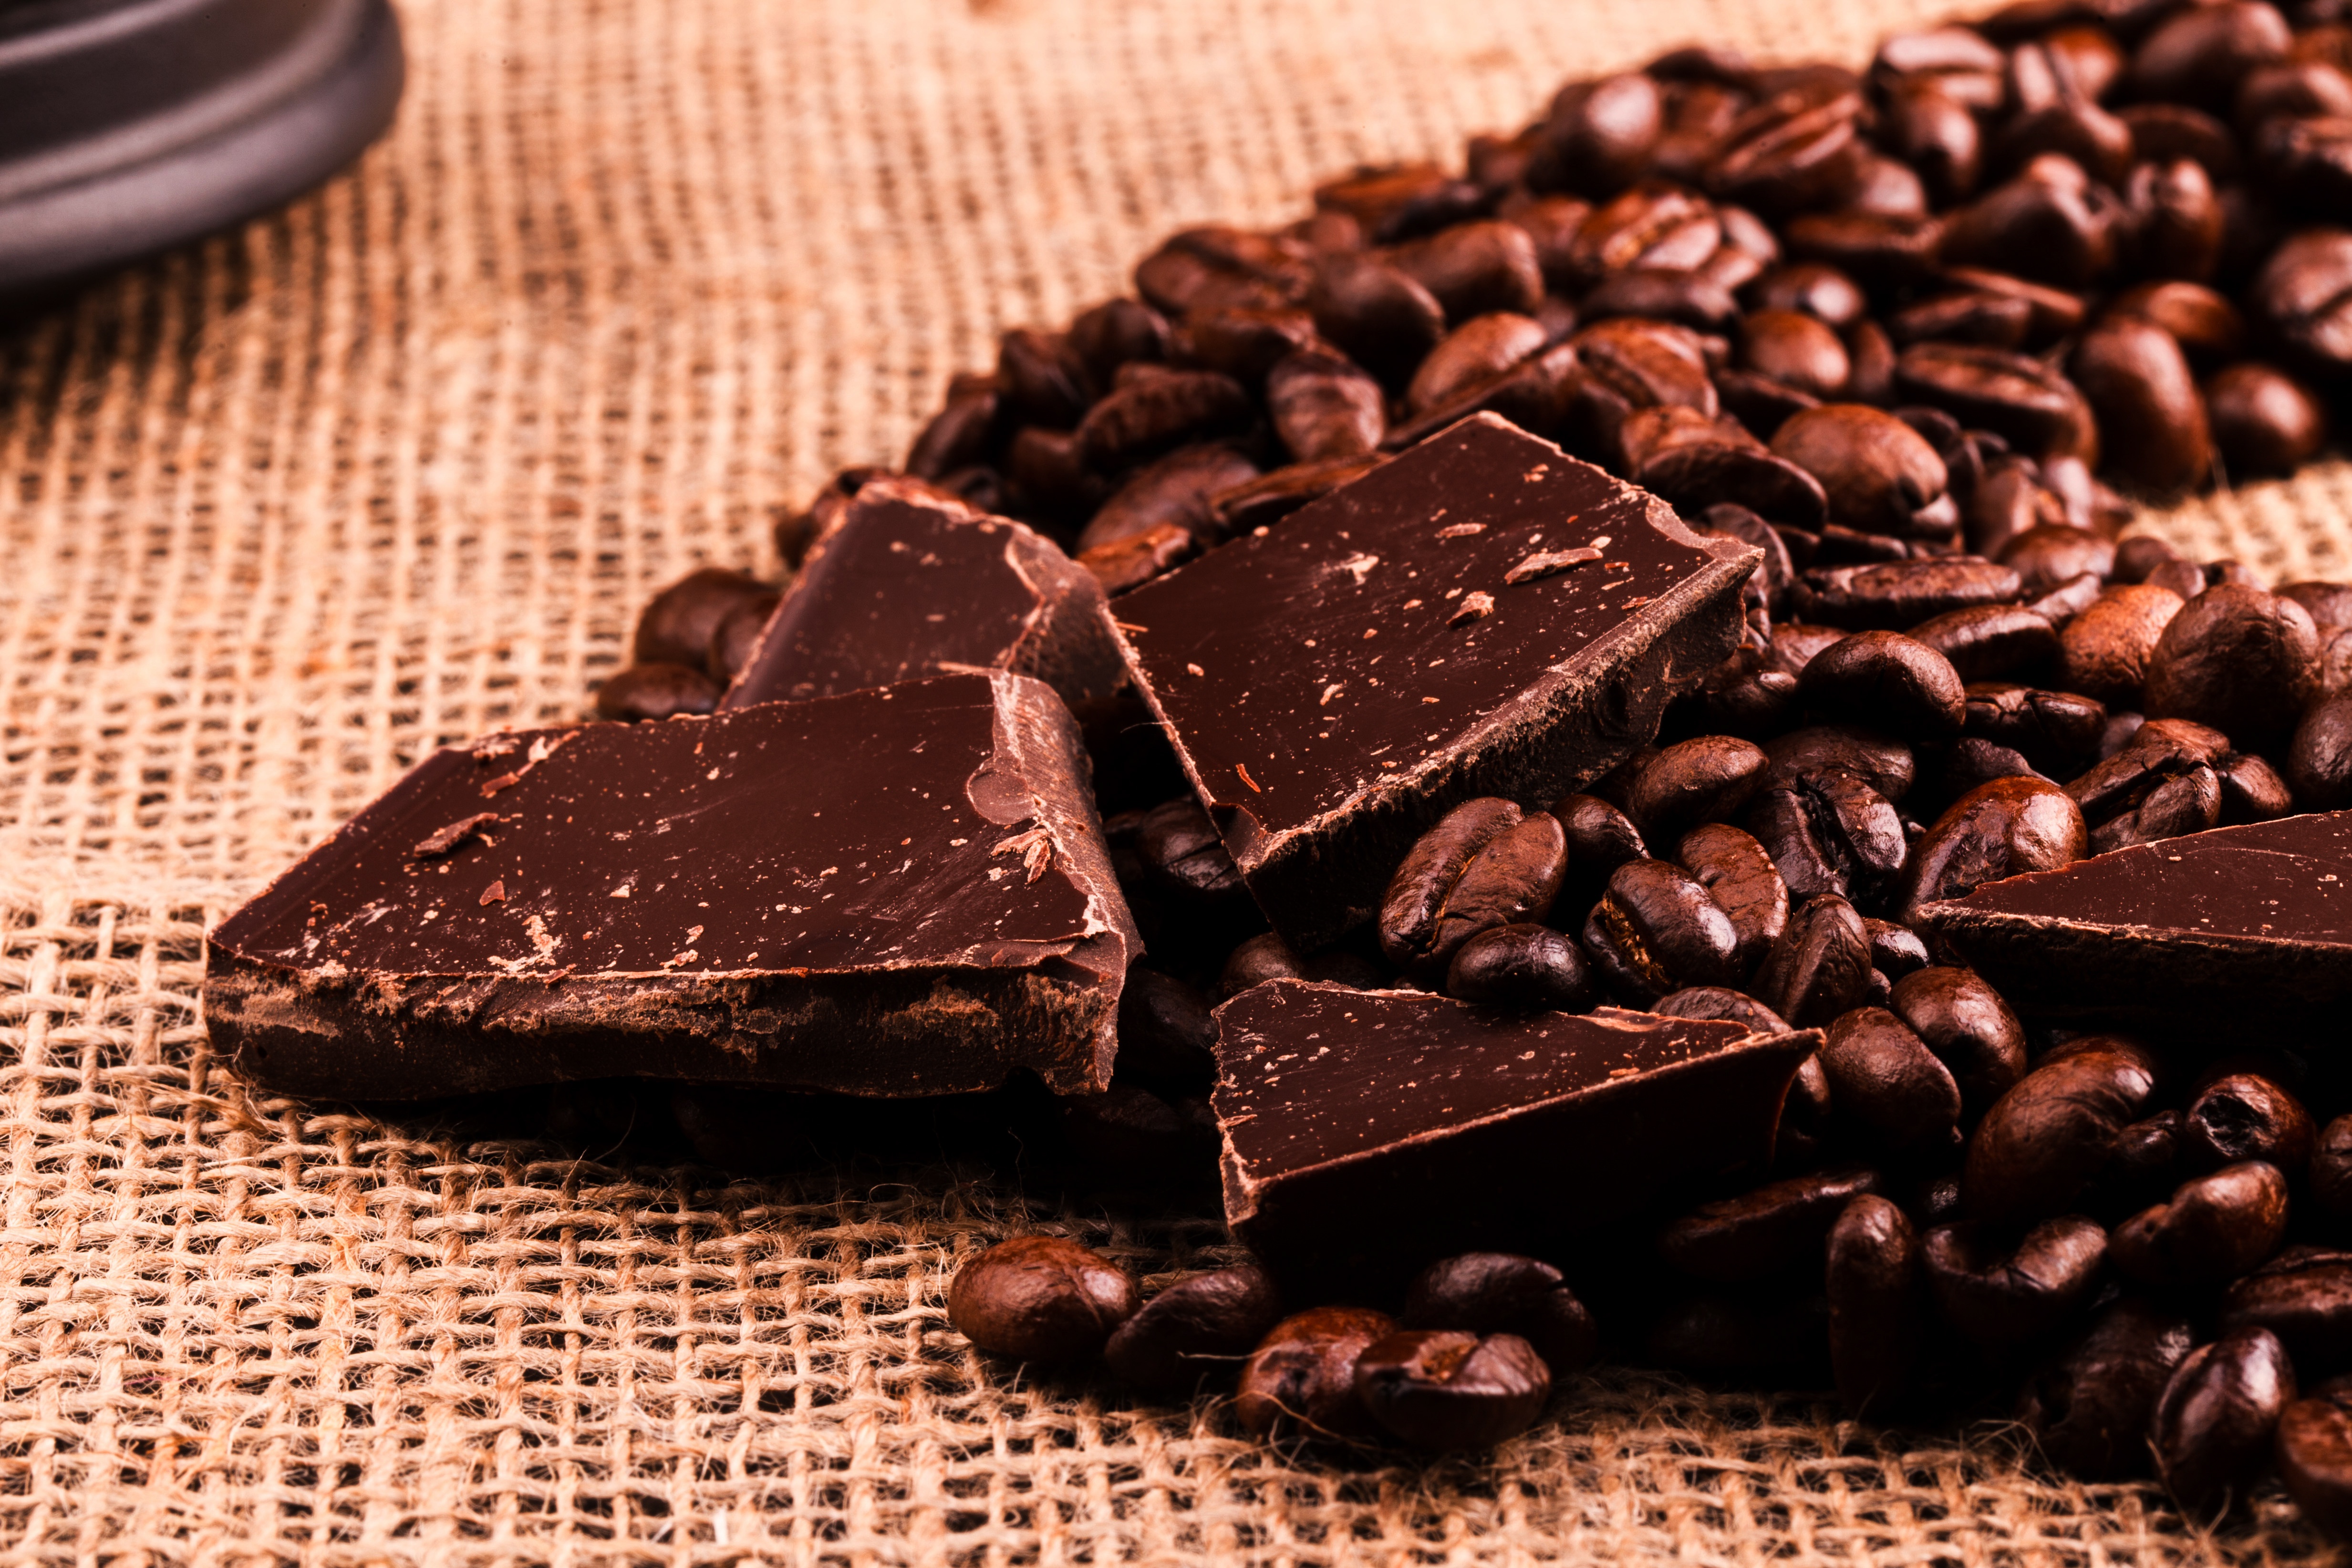 Chocolate pictures. Шоколад. Темный шоколад. Красивый шоколад. Шоколадная плитка.